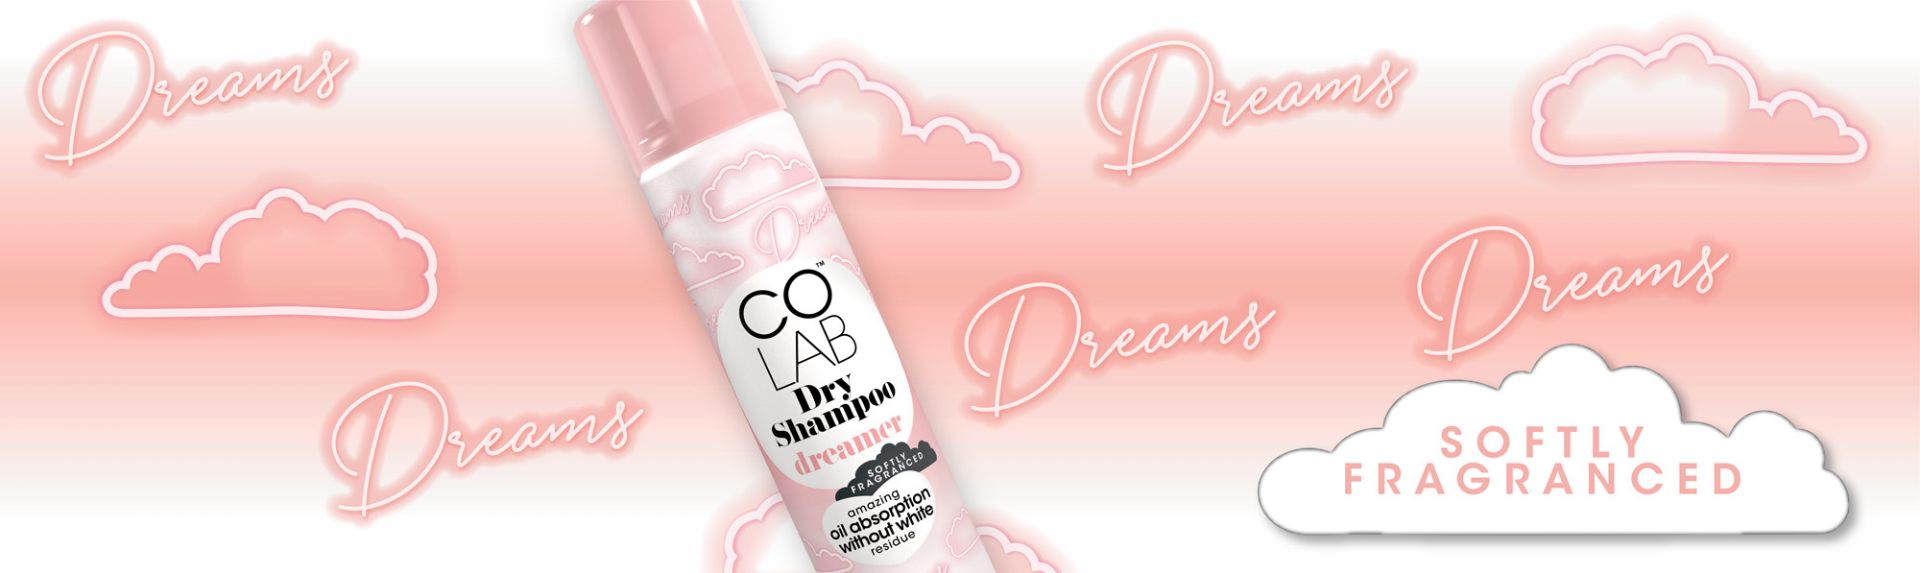 COLAB Dreamer Dry Shampoo banner